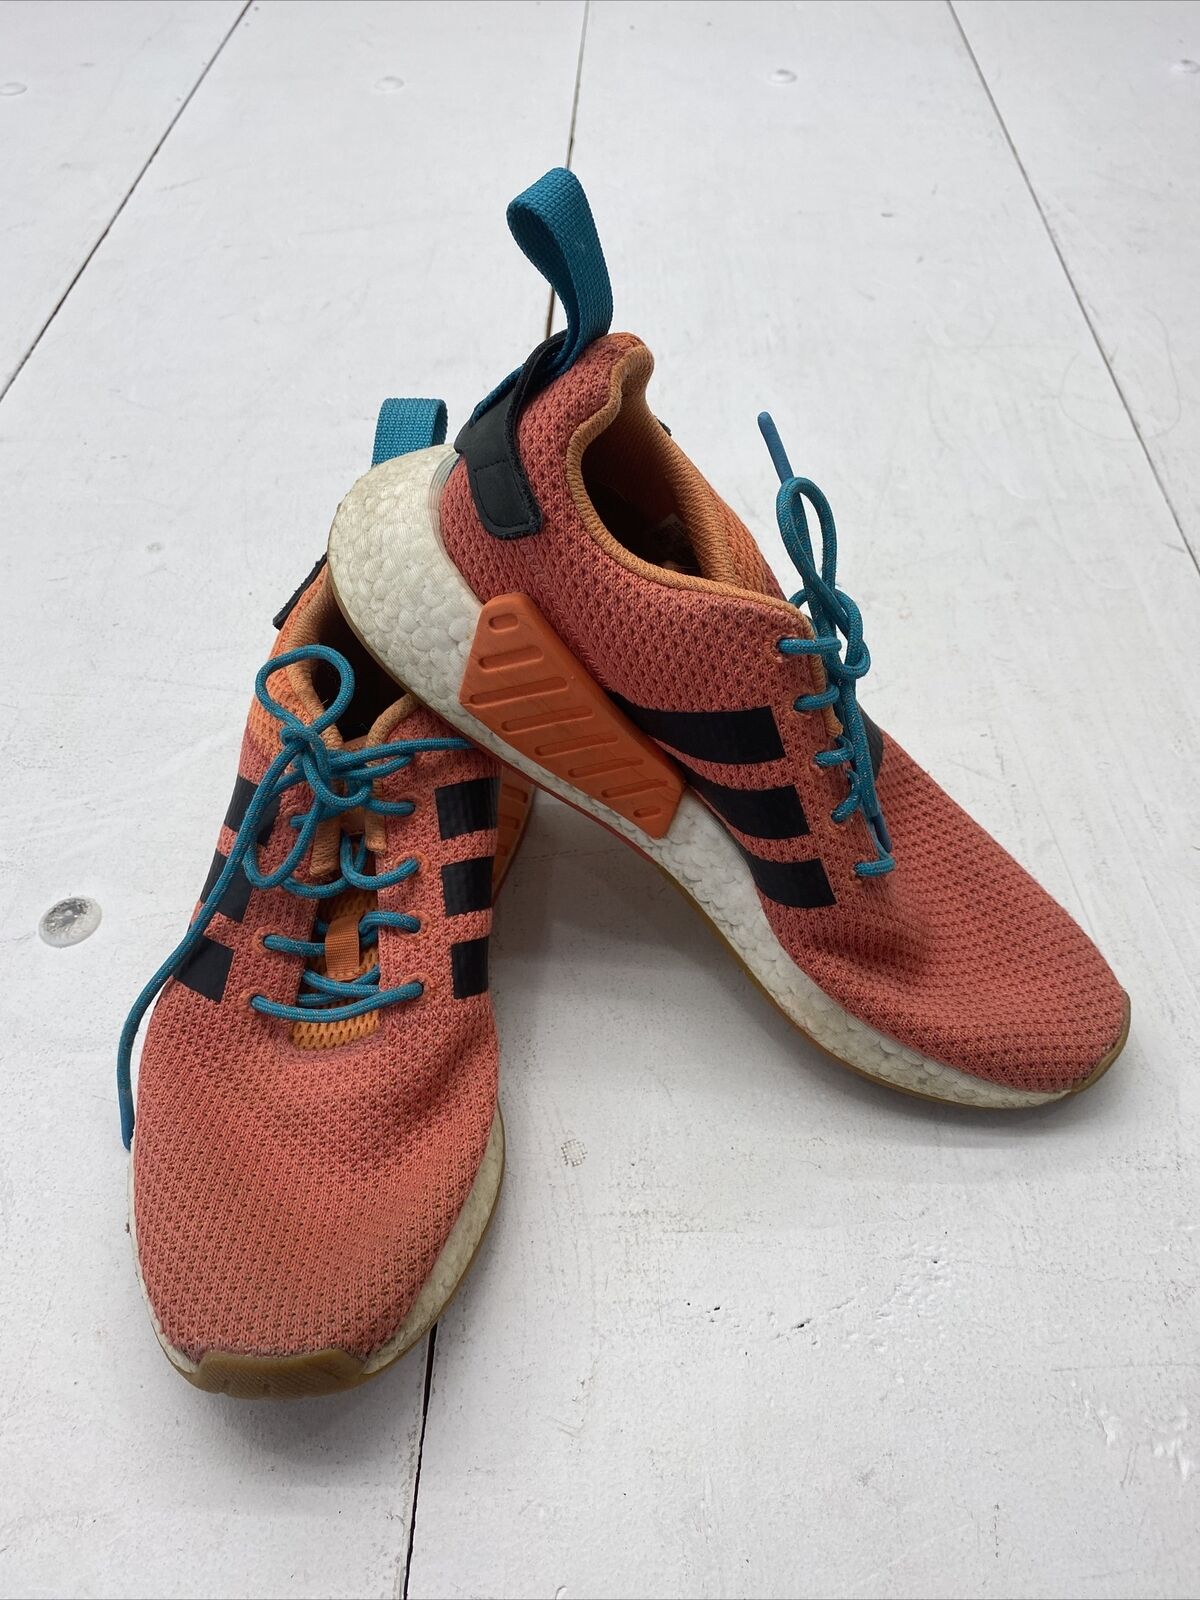 Adidas CQ3081 NMD_R2 Summer Orange Black Running Shoes Mens Size 7.5*